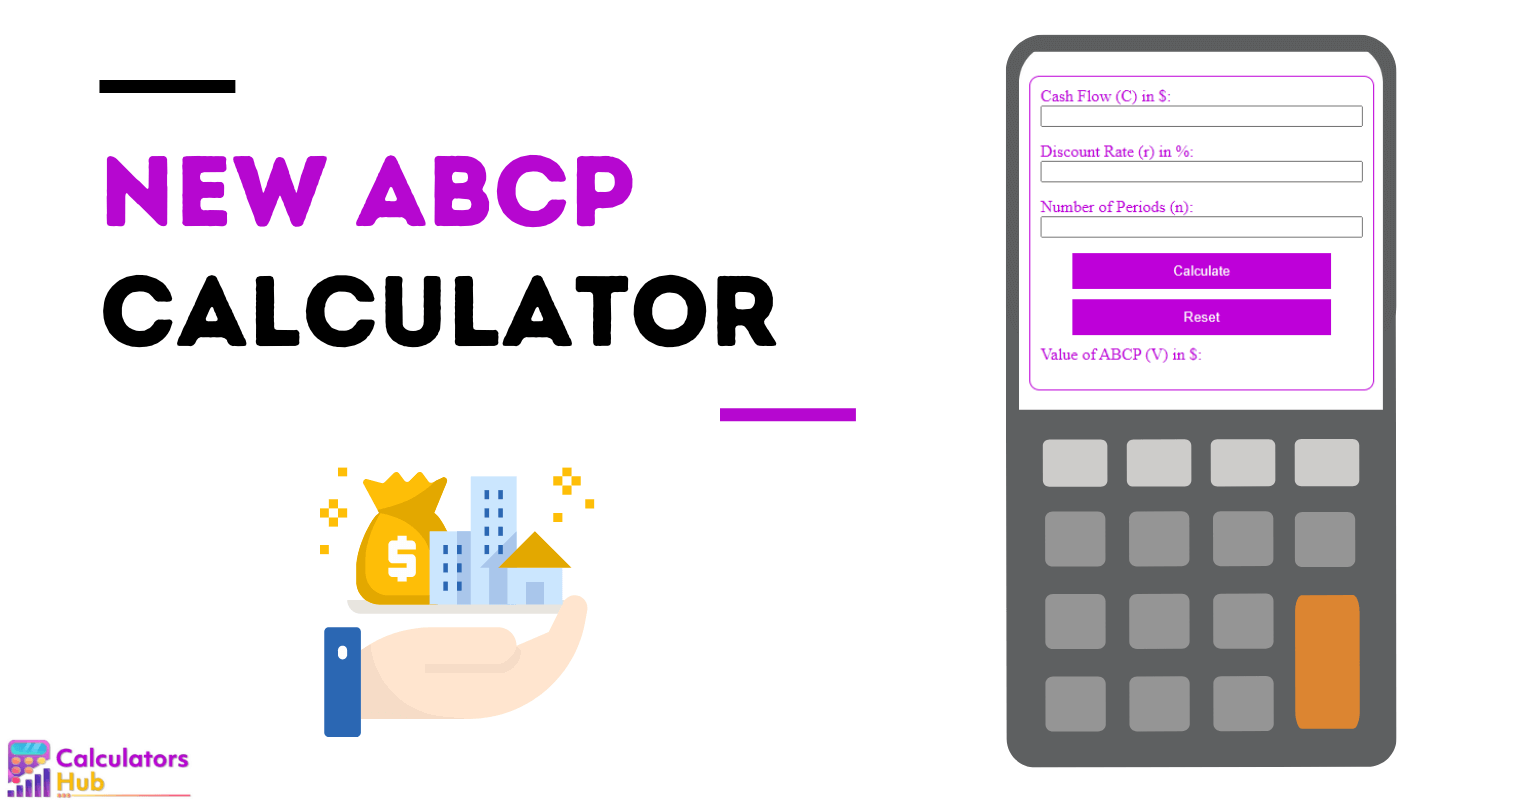 Nueva calculadora ABCP